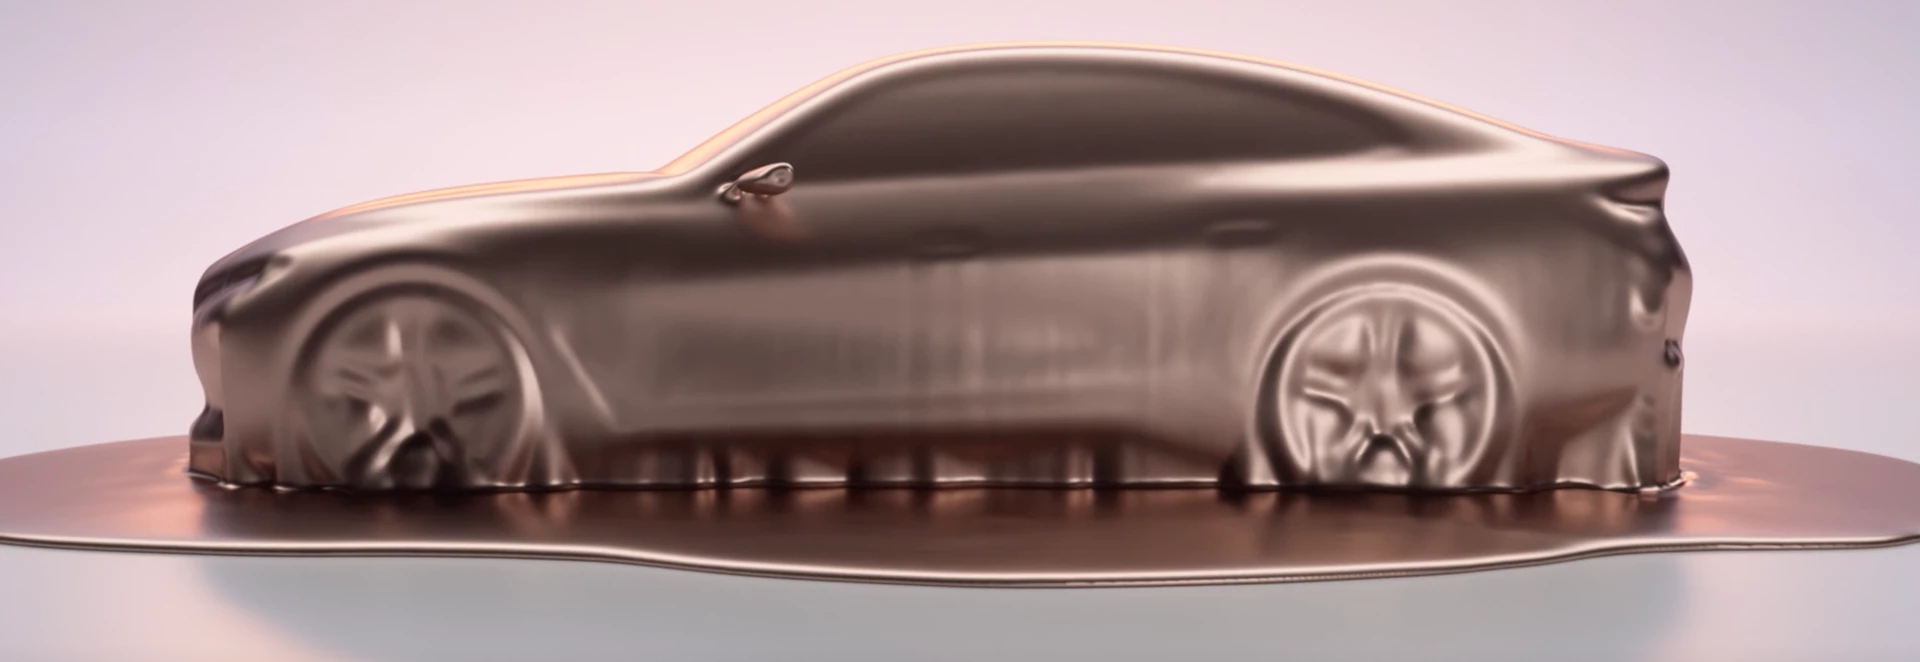 BMW Concept i4 teased ahead of Geneva Motor Show reveal